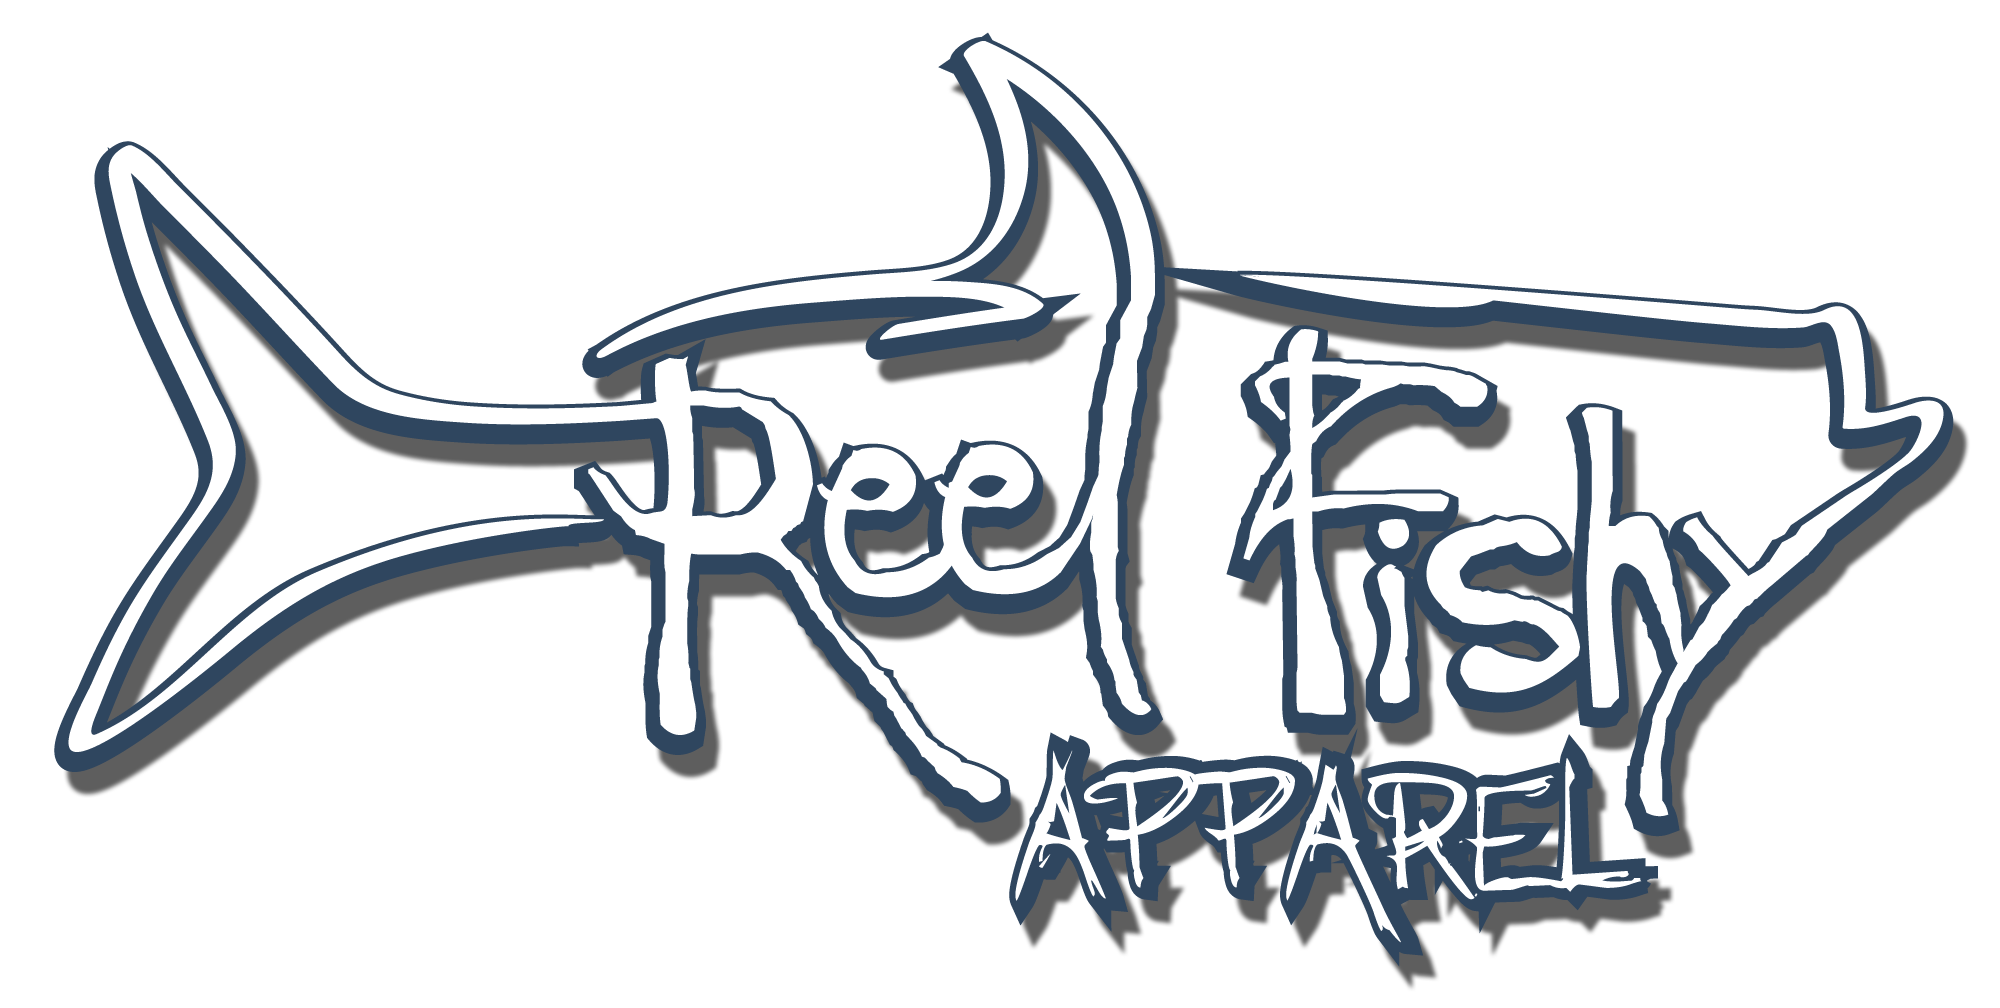 Reel Fishy Apparel